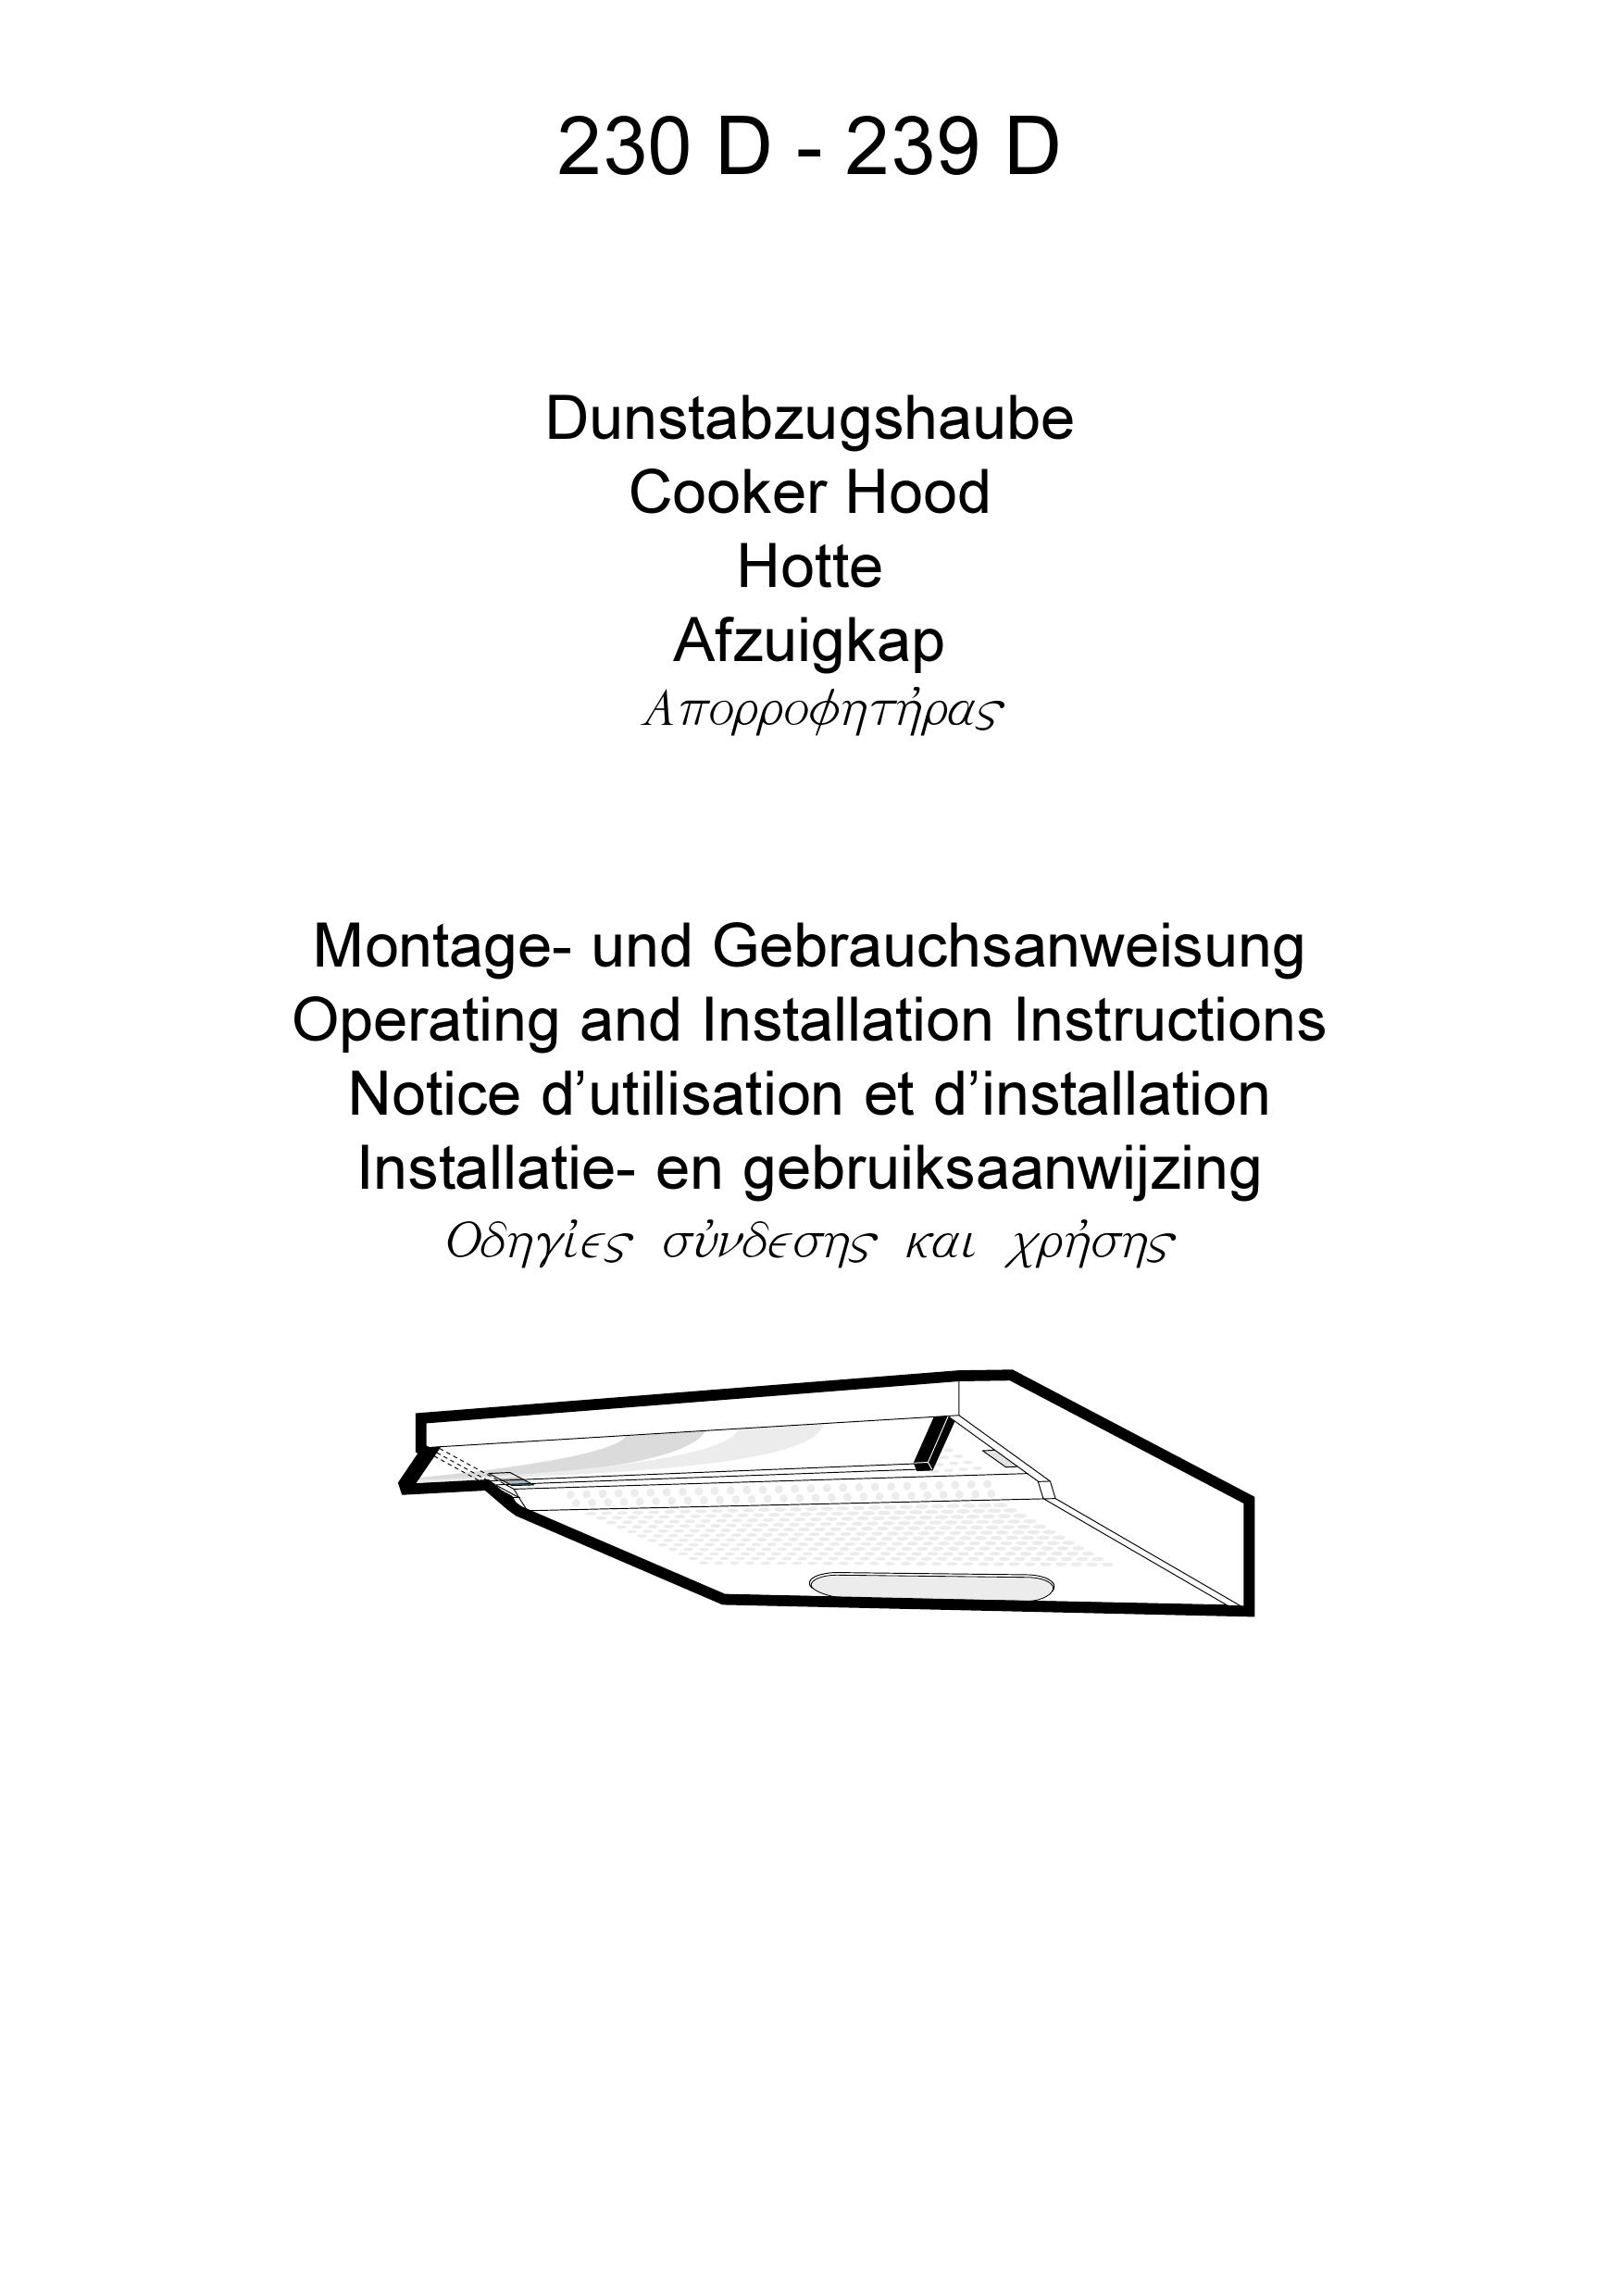 AEG 230 D Ventilation Hood User Manual